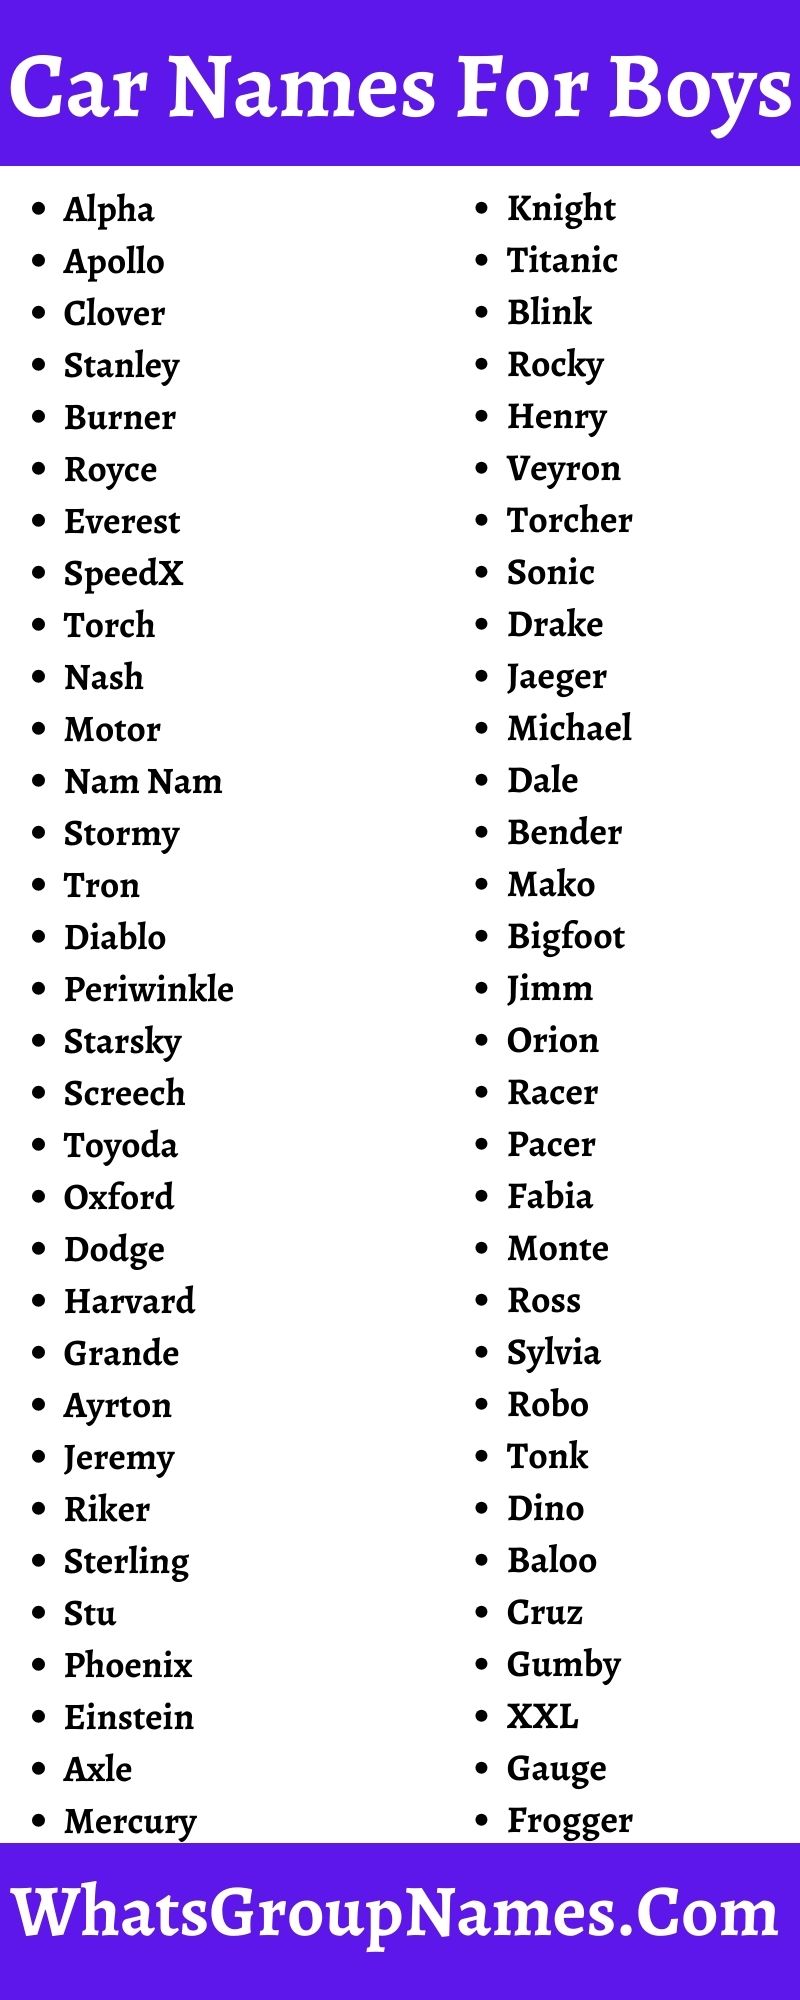 Car Names For Boys